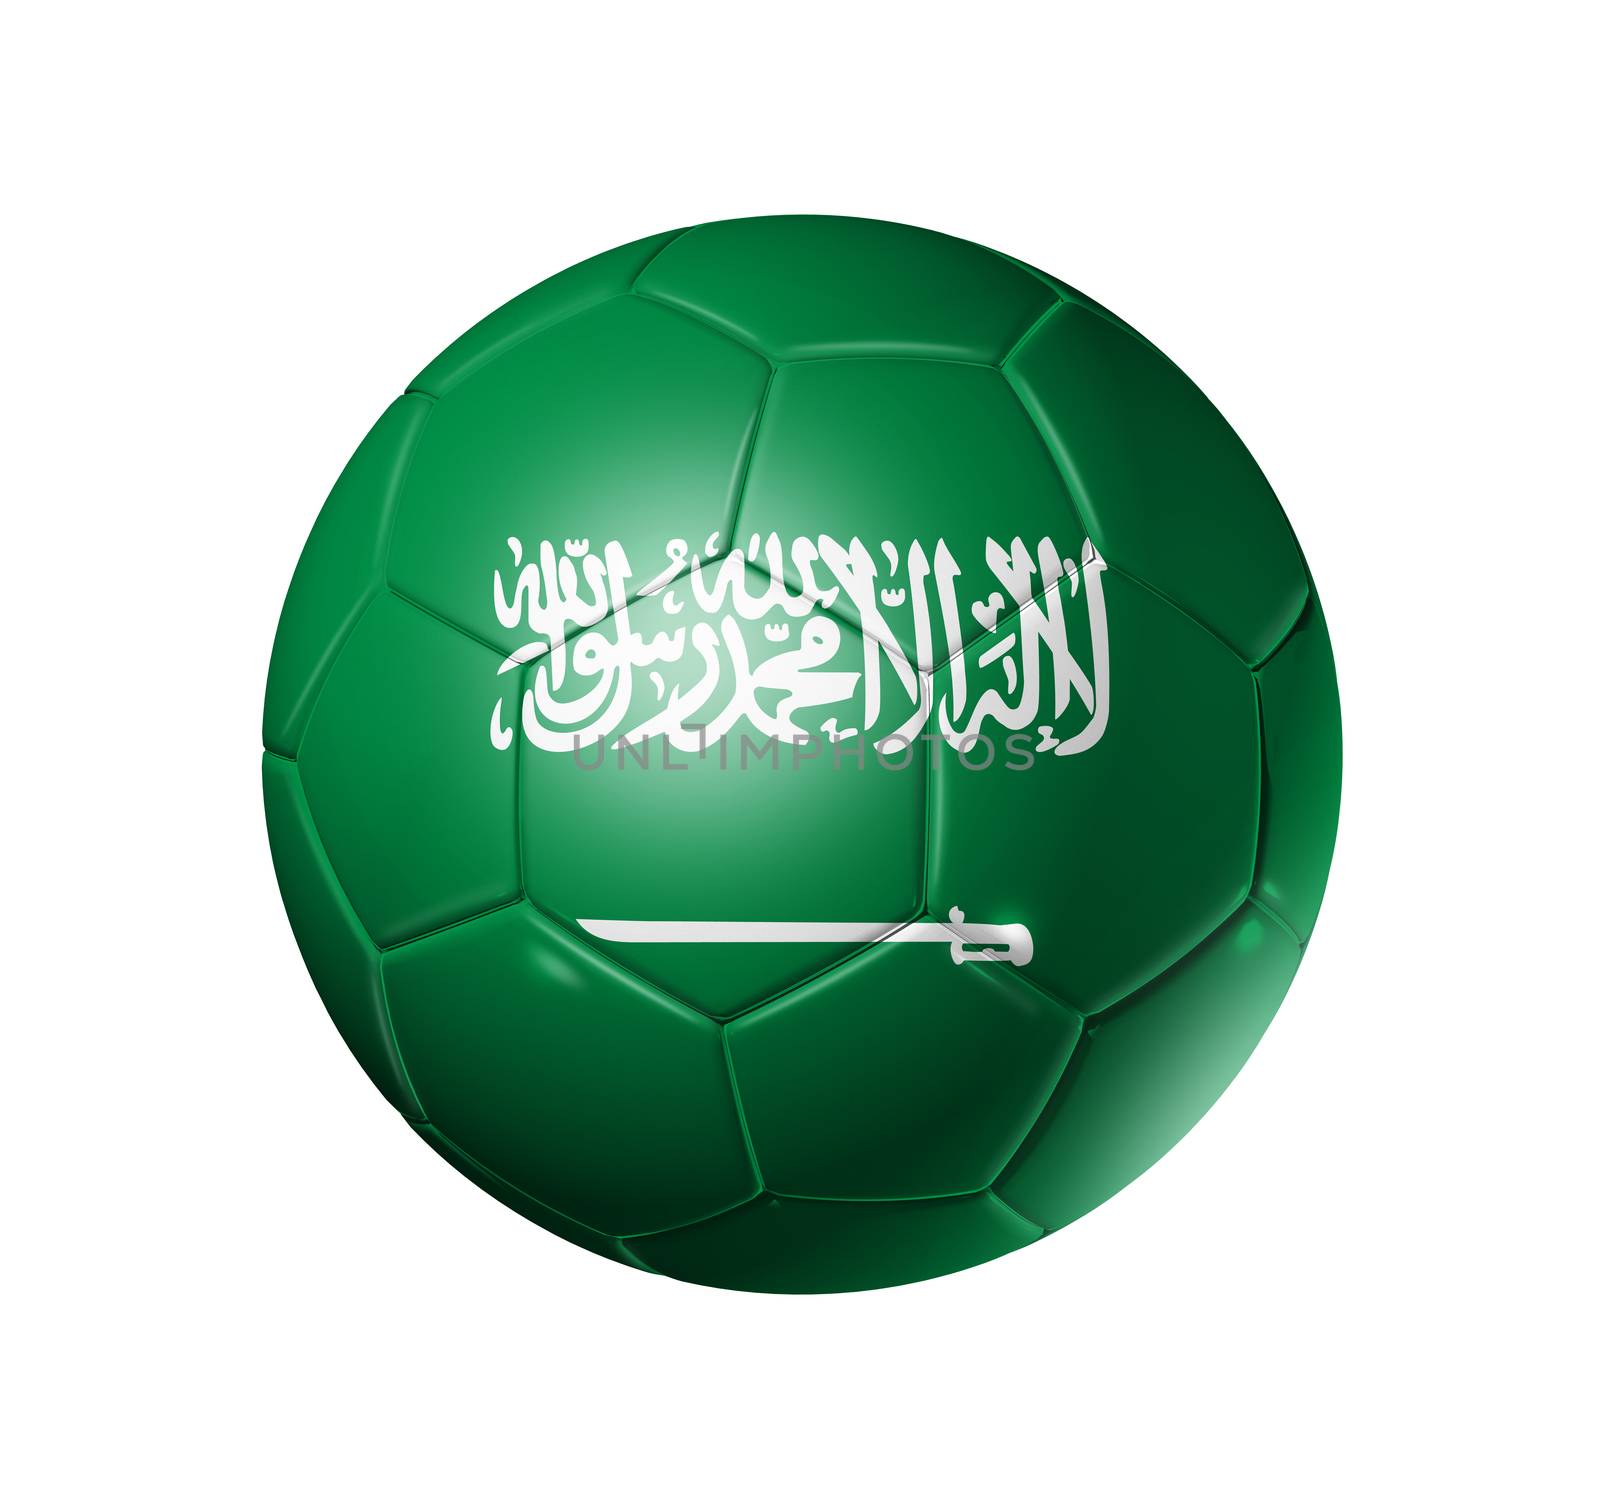 Soccer football ball with Saudi Arabia flag by daboost